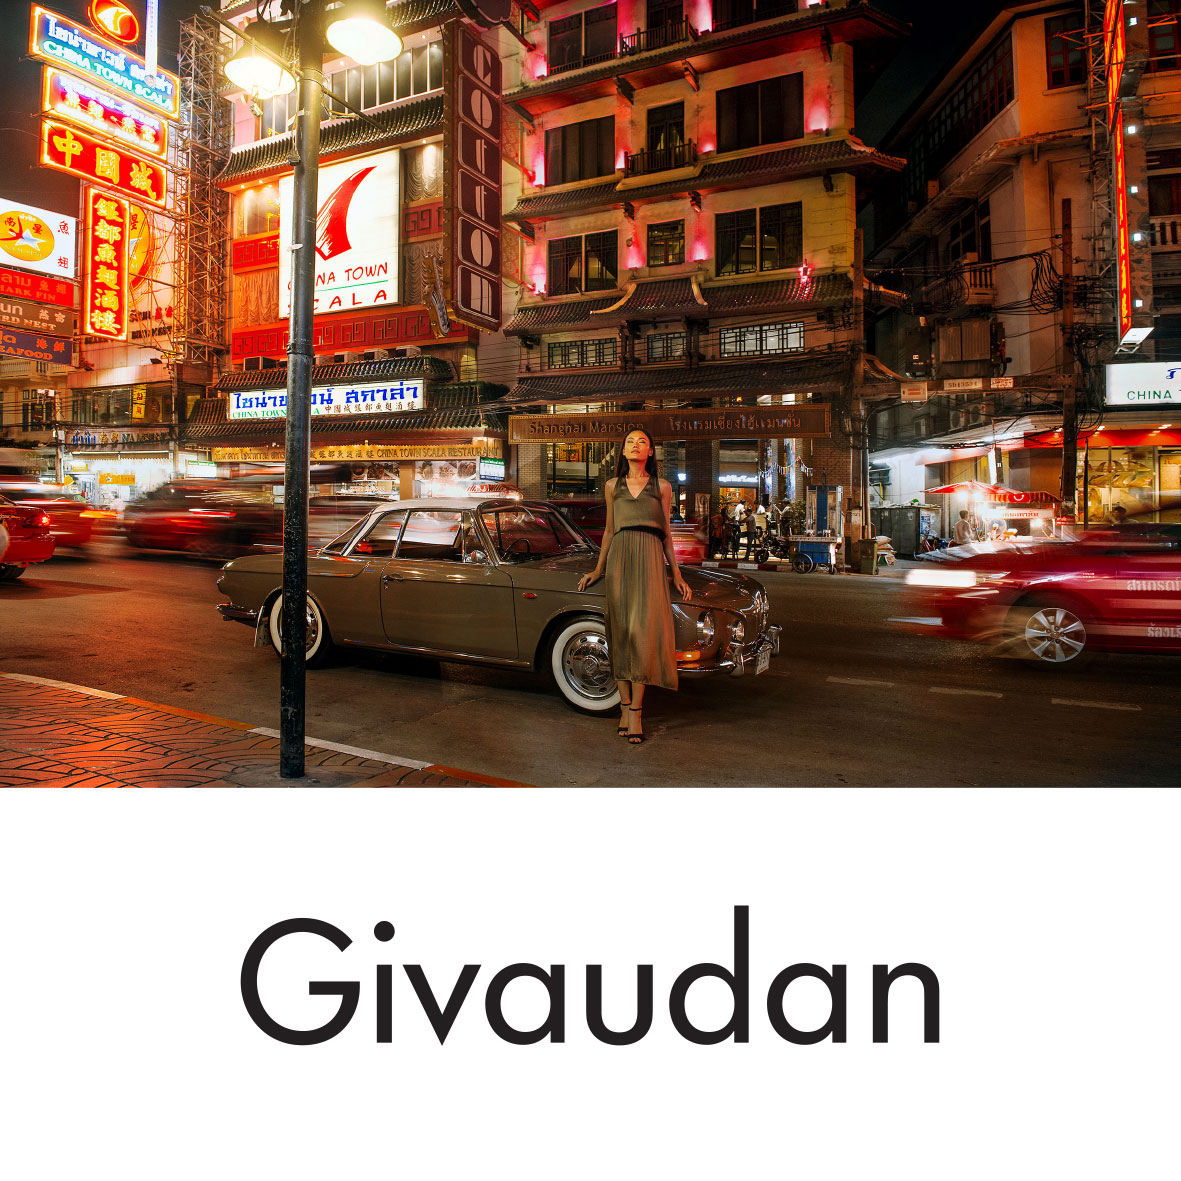 Givaudan rebrand launch in France